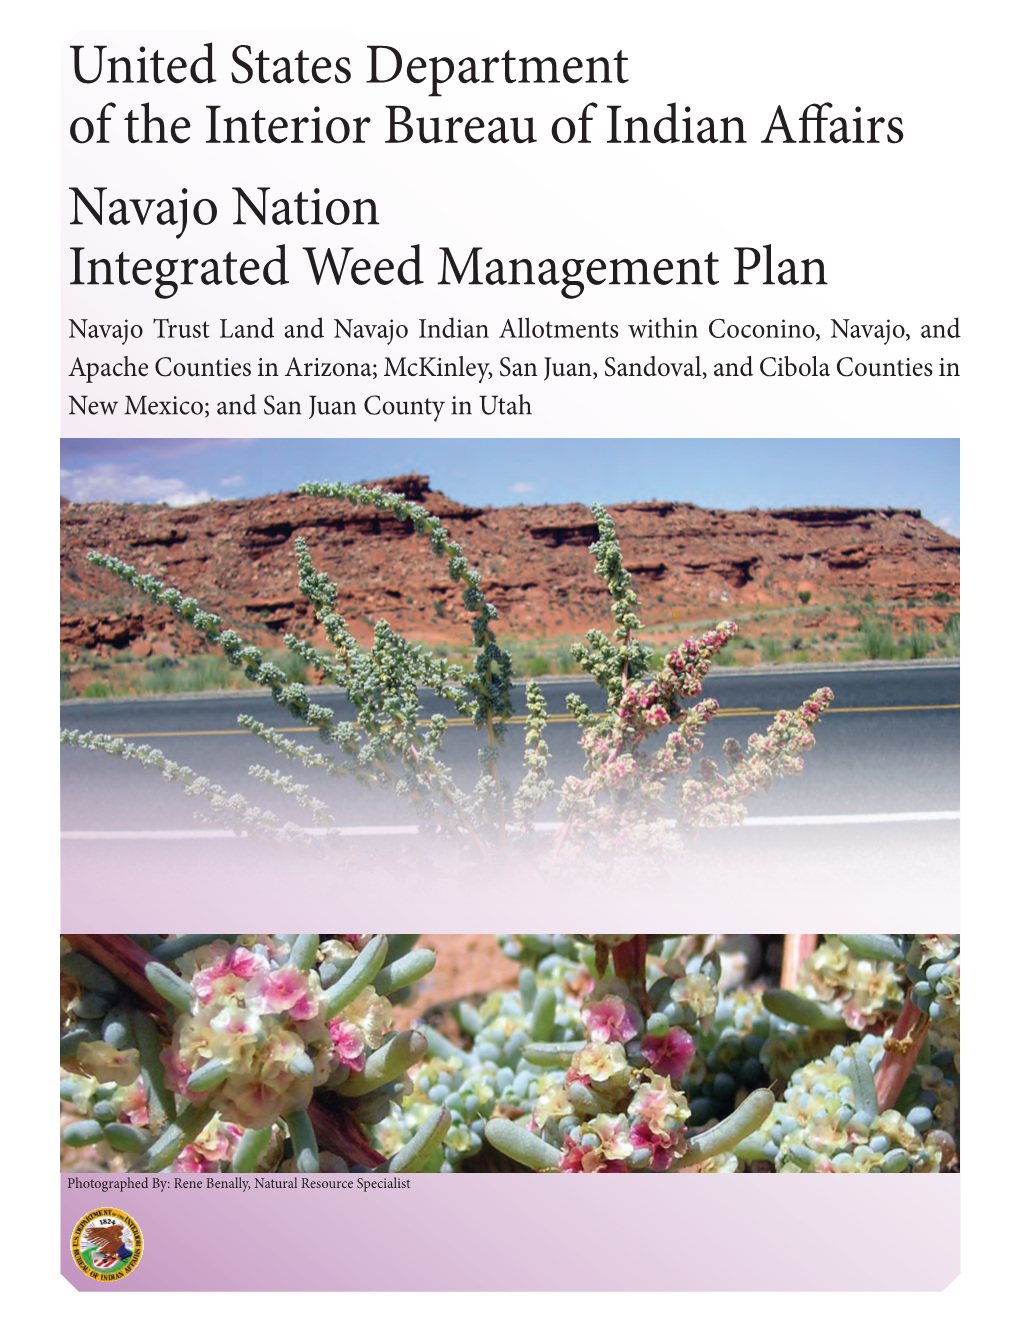 Navajo Nation Integrated Weed Management Plan